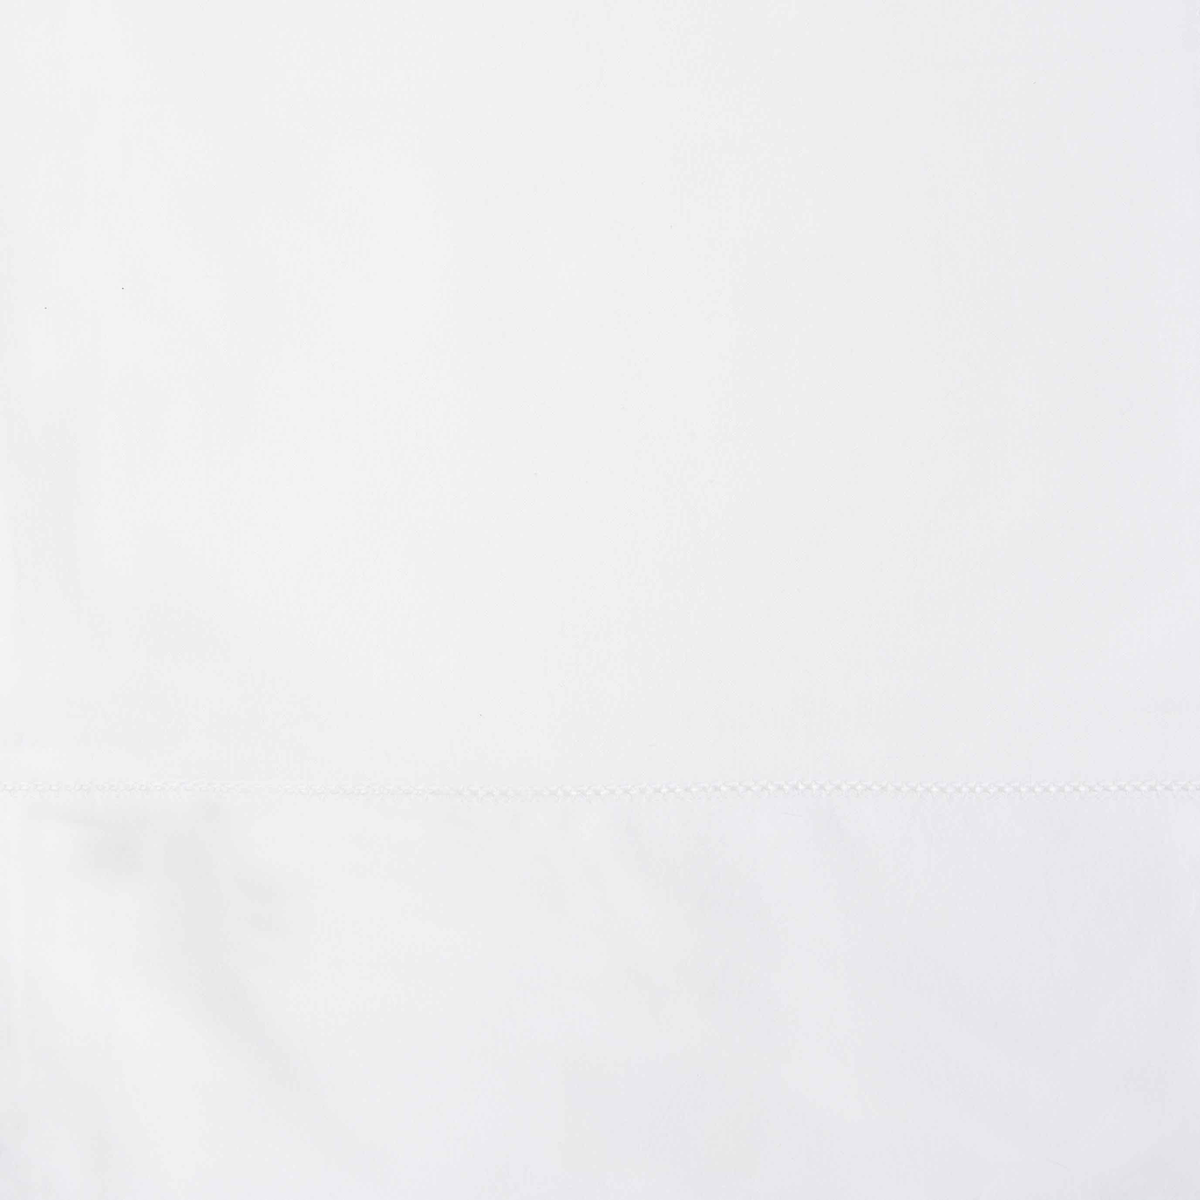 Swatch Sample of White Signoria Nuvola Percale Bedding